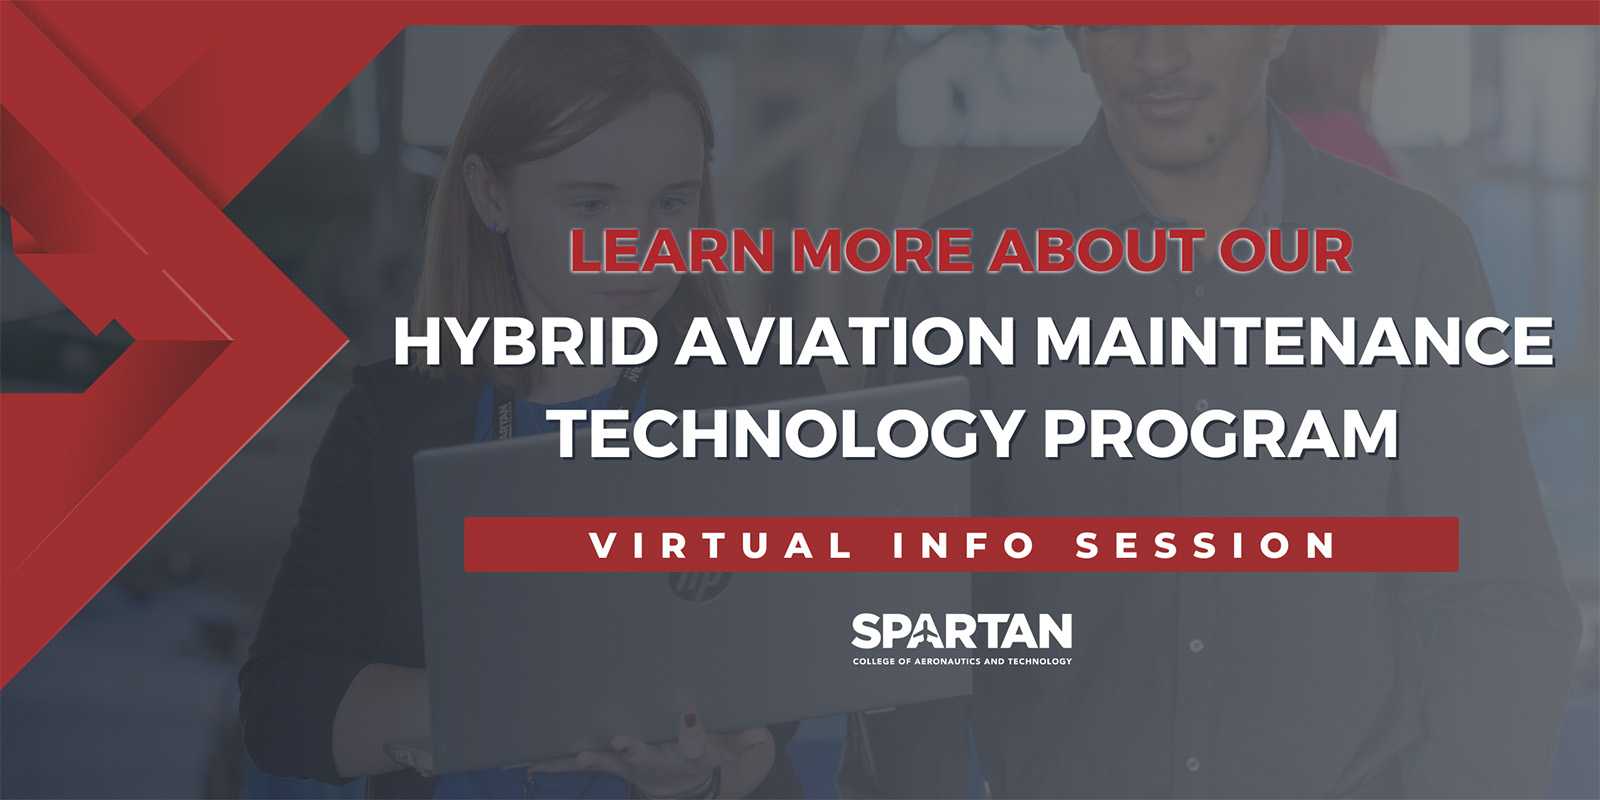 Hybrid Aviation Maintenance Tech Program spartan college event